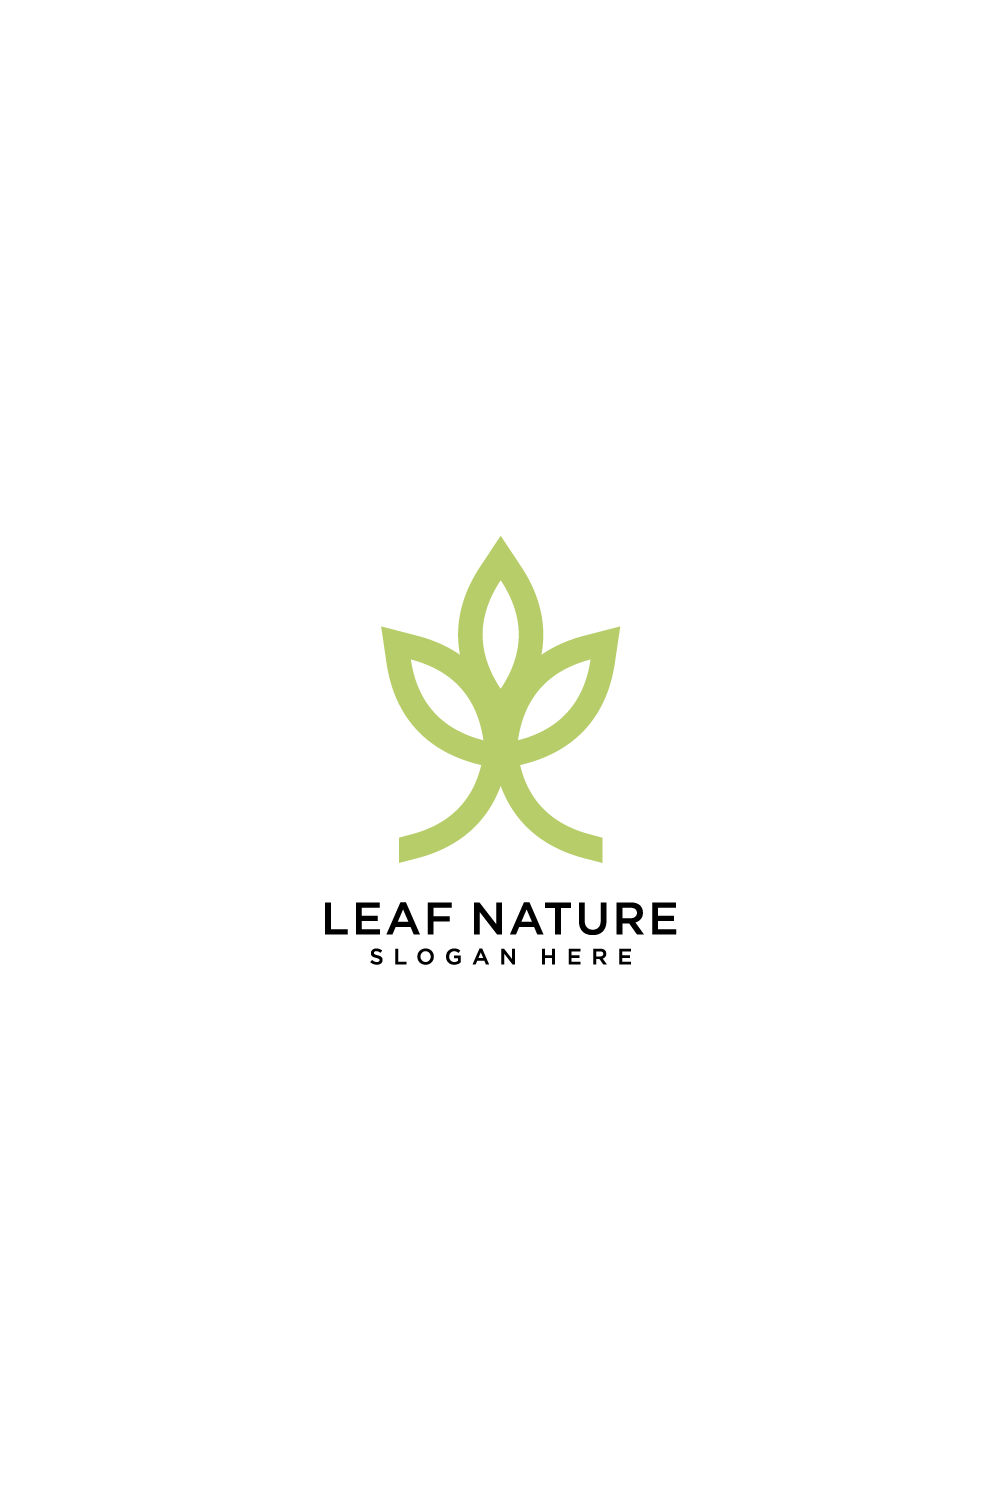 leaf nature vector design template pinterest preview image.